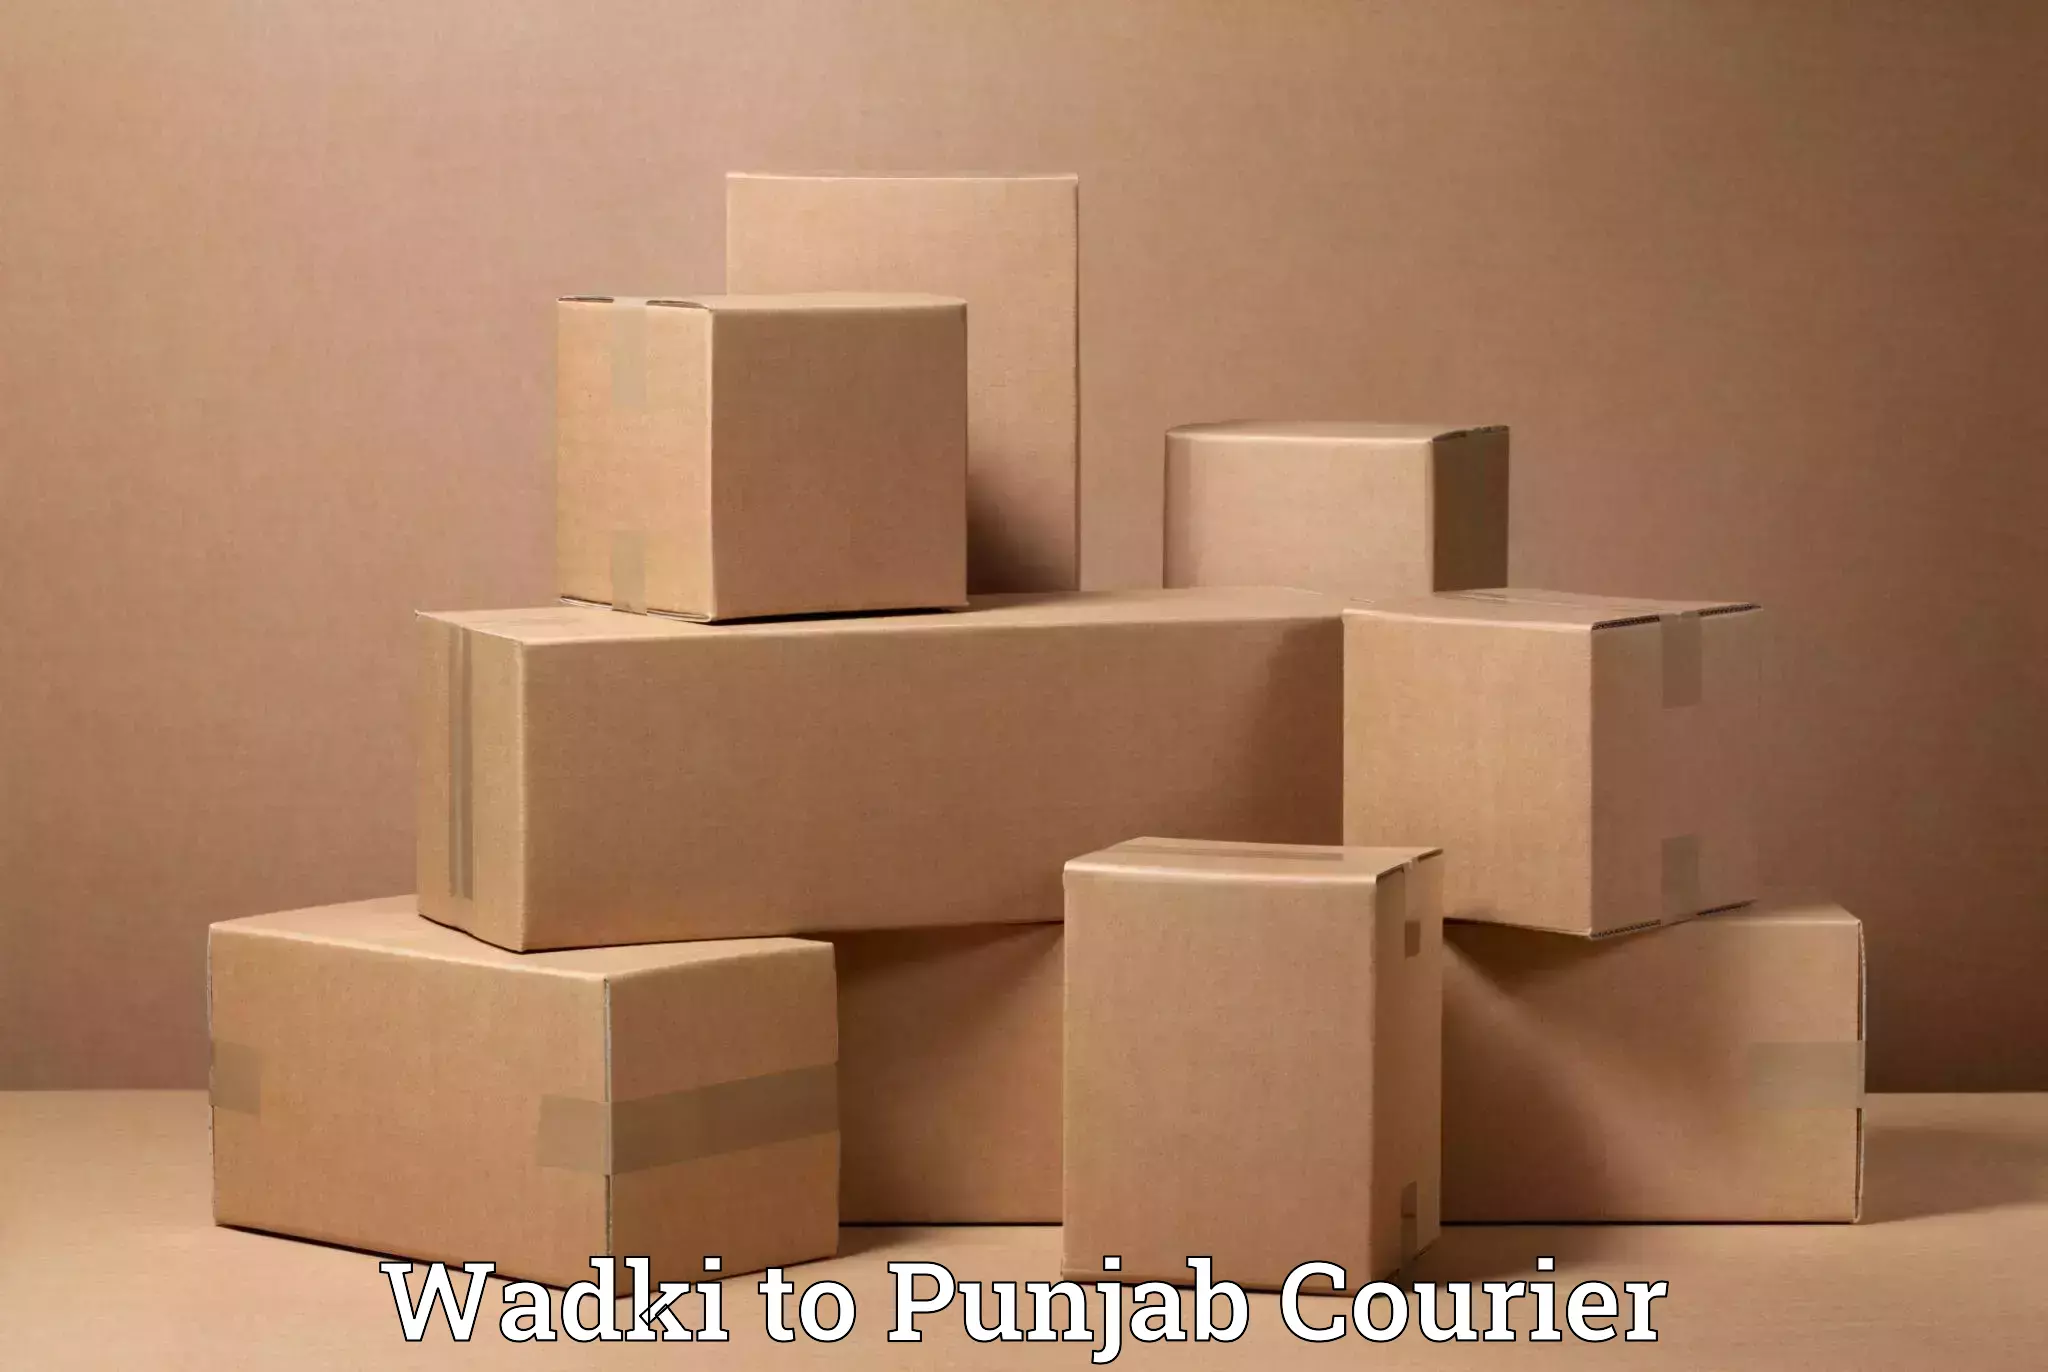 Trusted household movers Wadki to Punjab